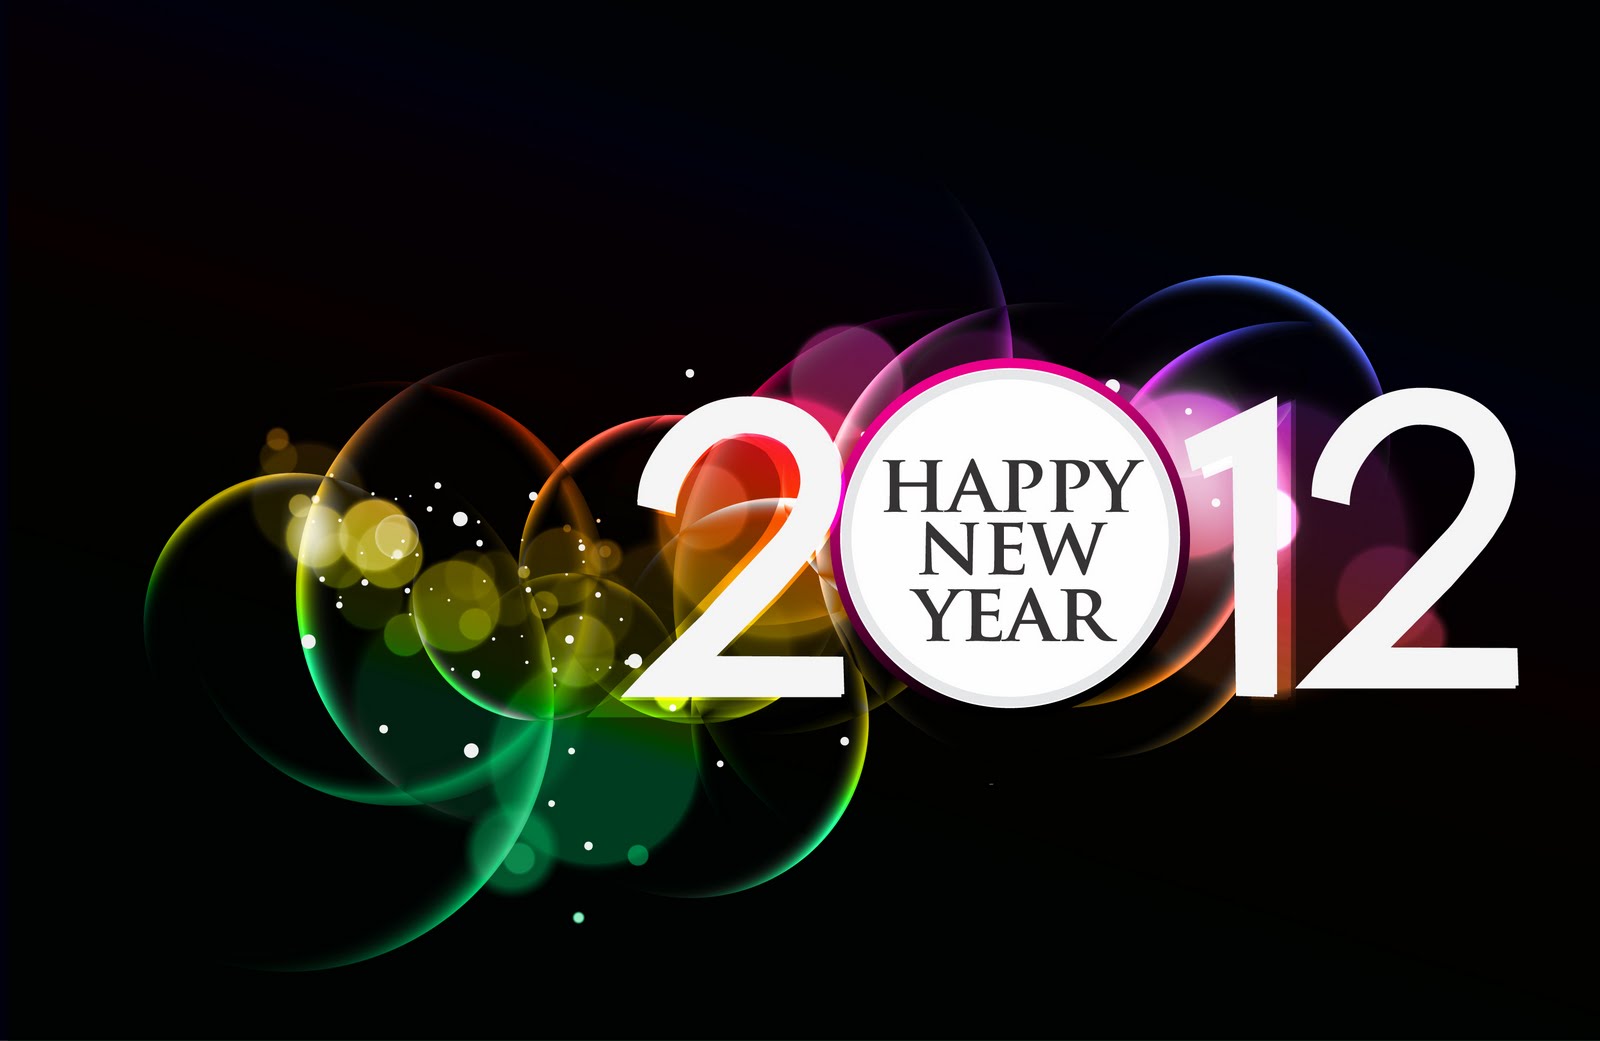 New Year 2012 #1